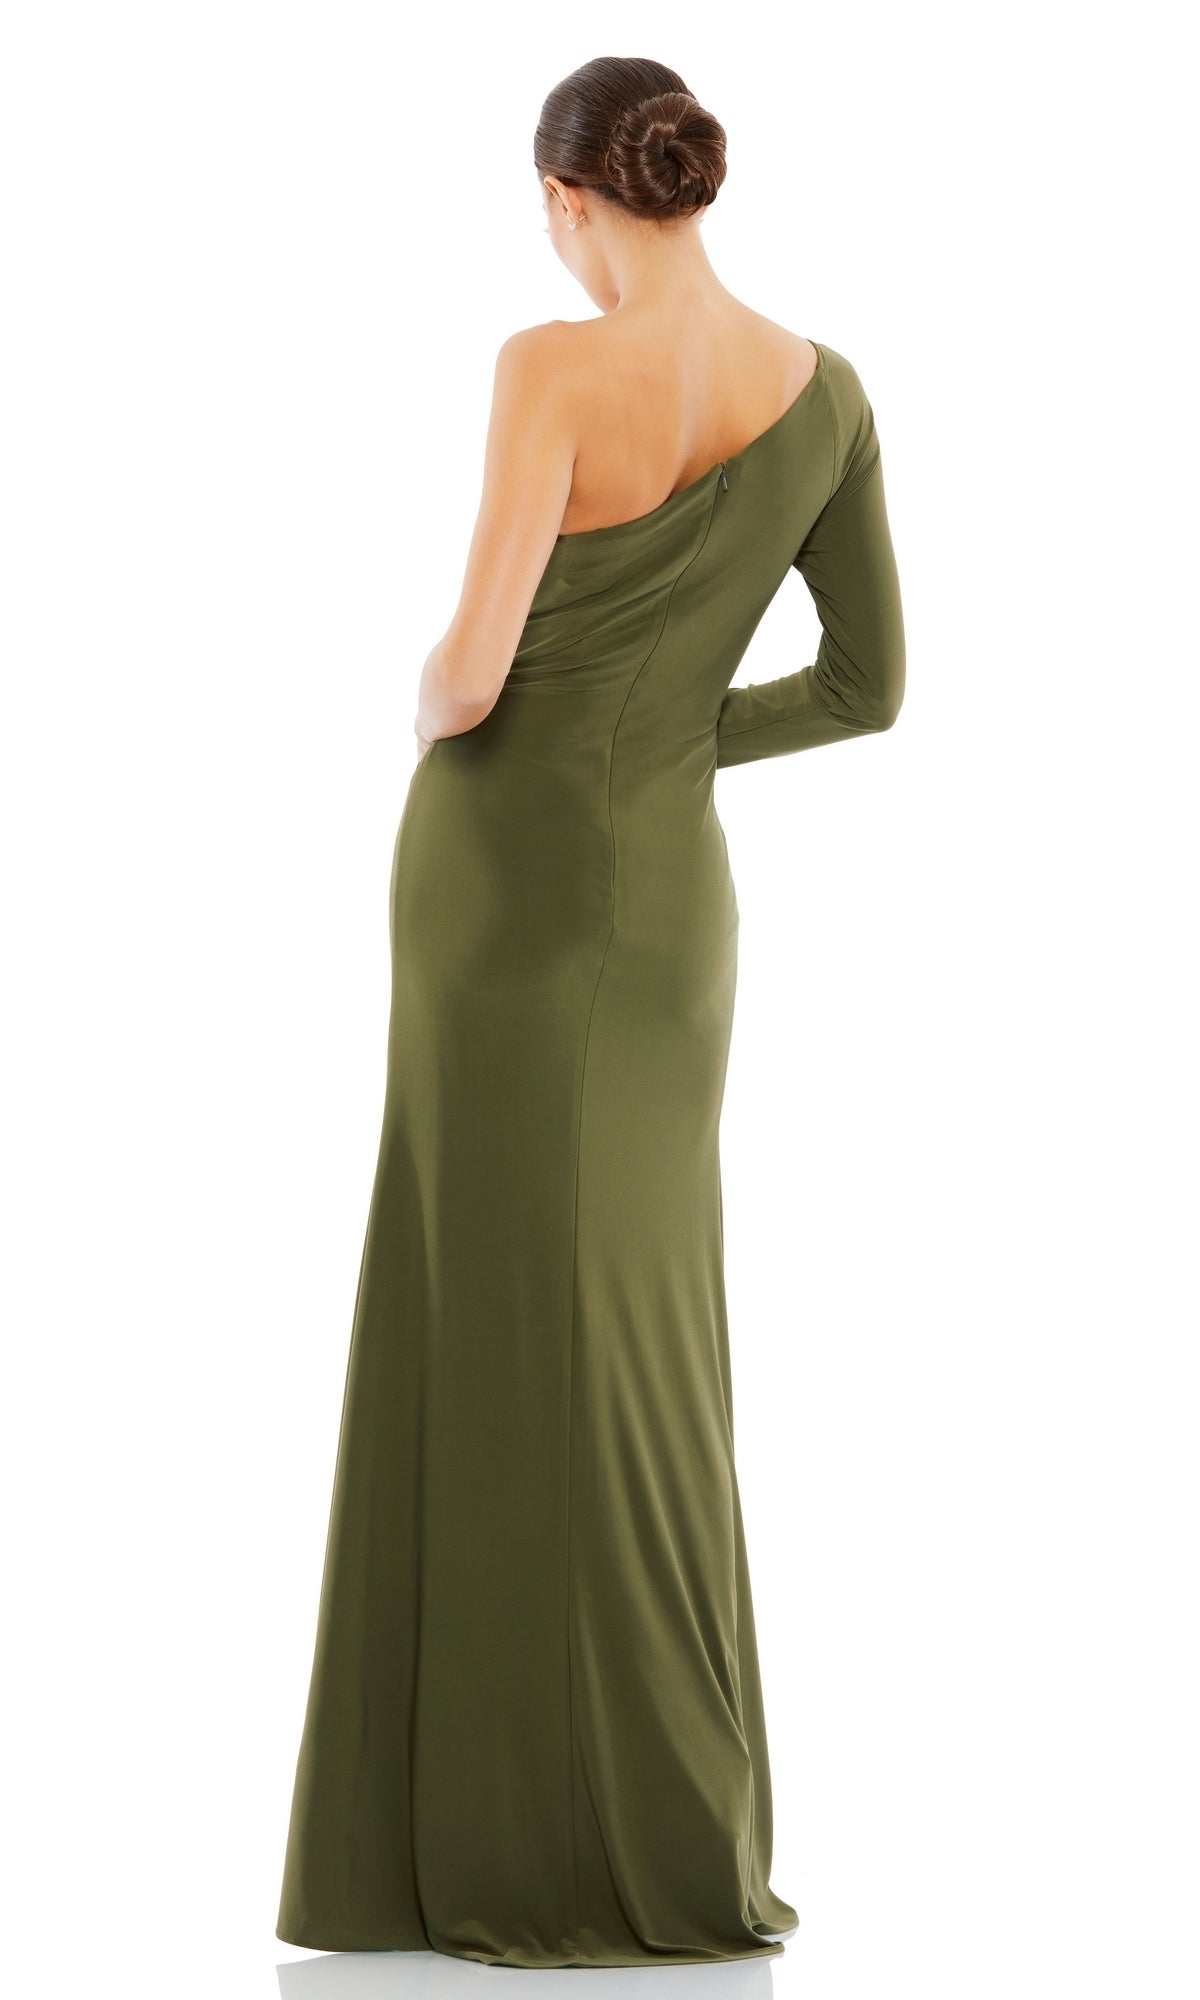 Long Formal Dress 55696 by Mac Duggal